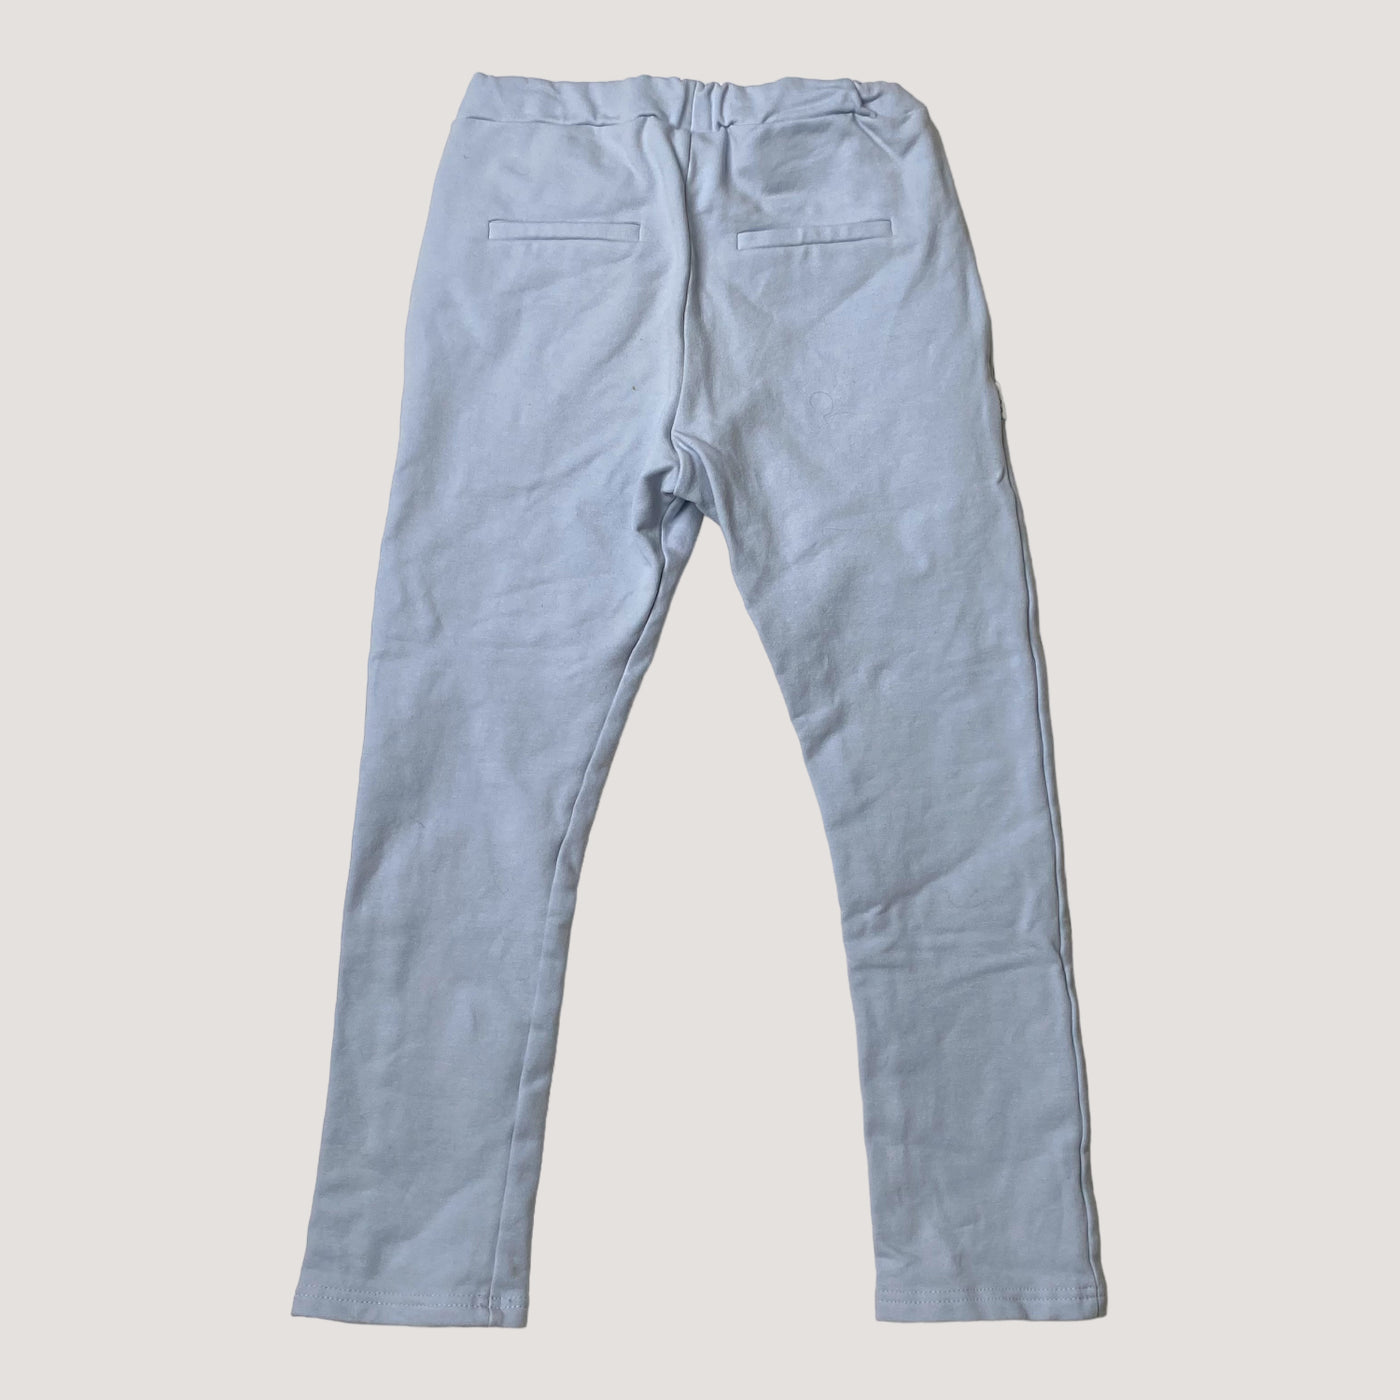 Gugguu slim sweat pants, baby blue | 116cm